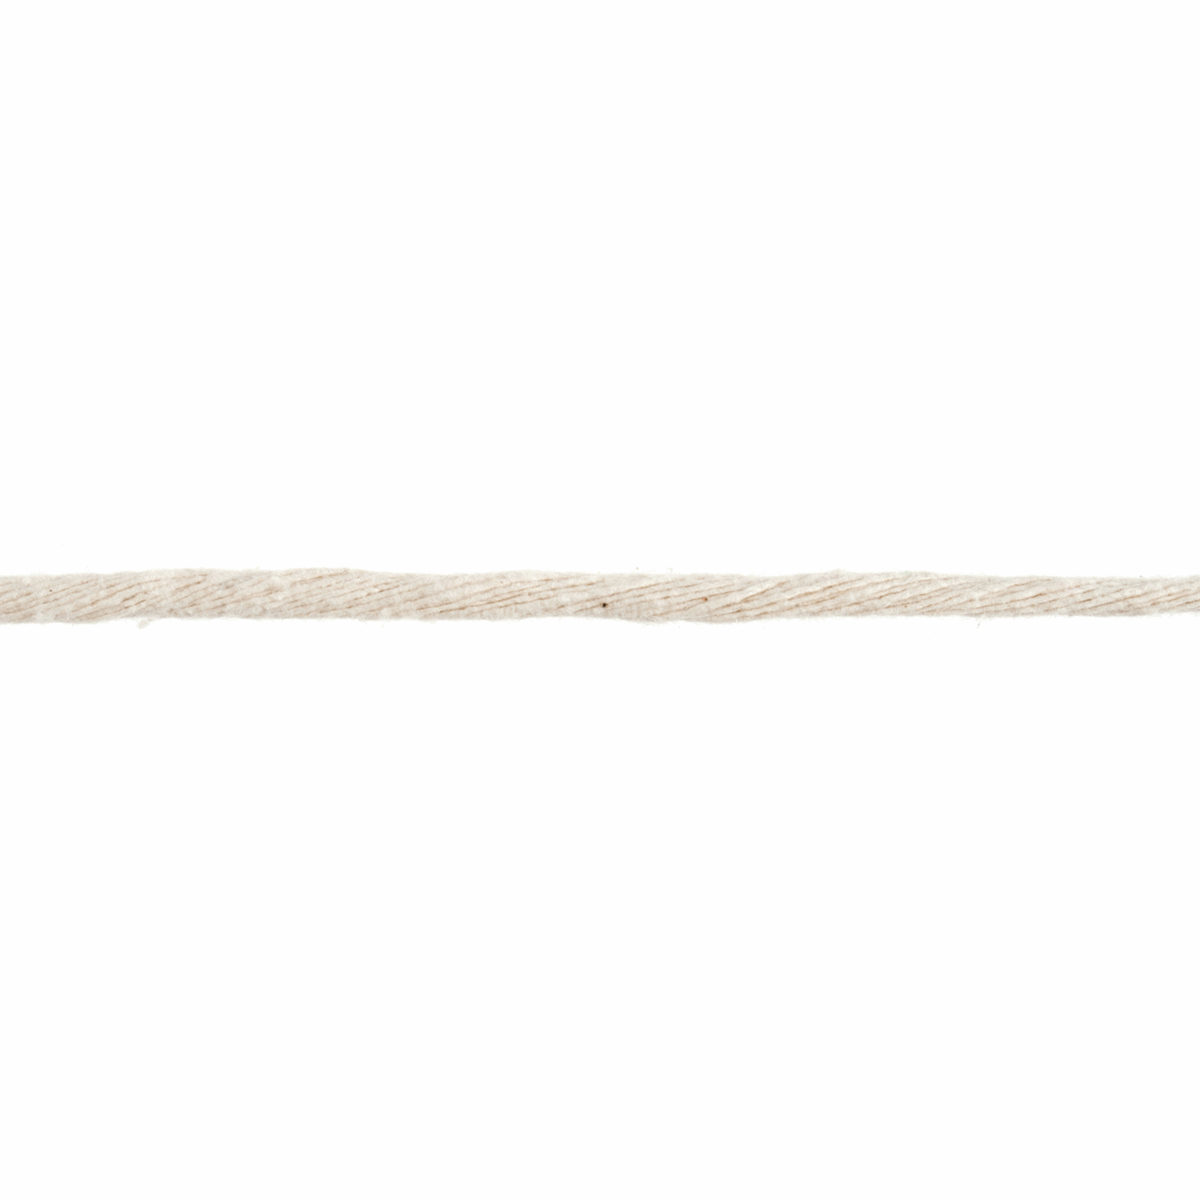 Cotton Macram Cord: 50m x 4mm: Natural